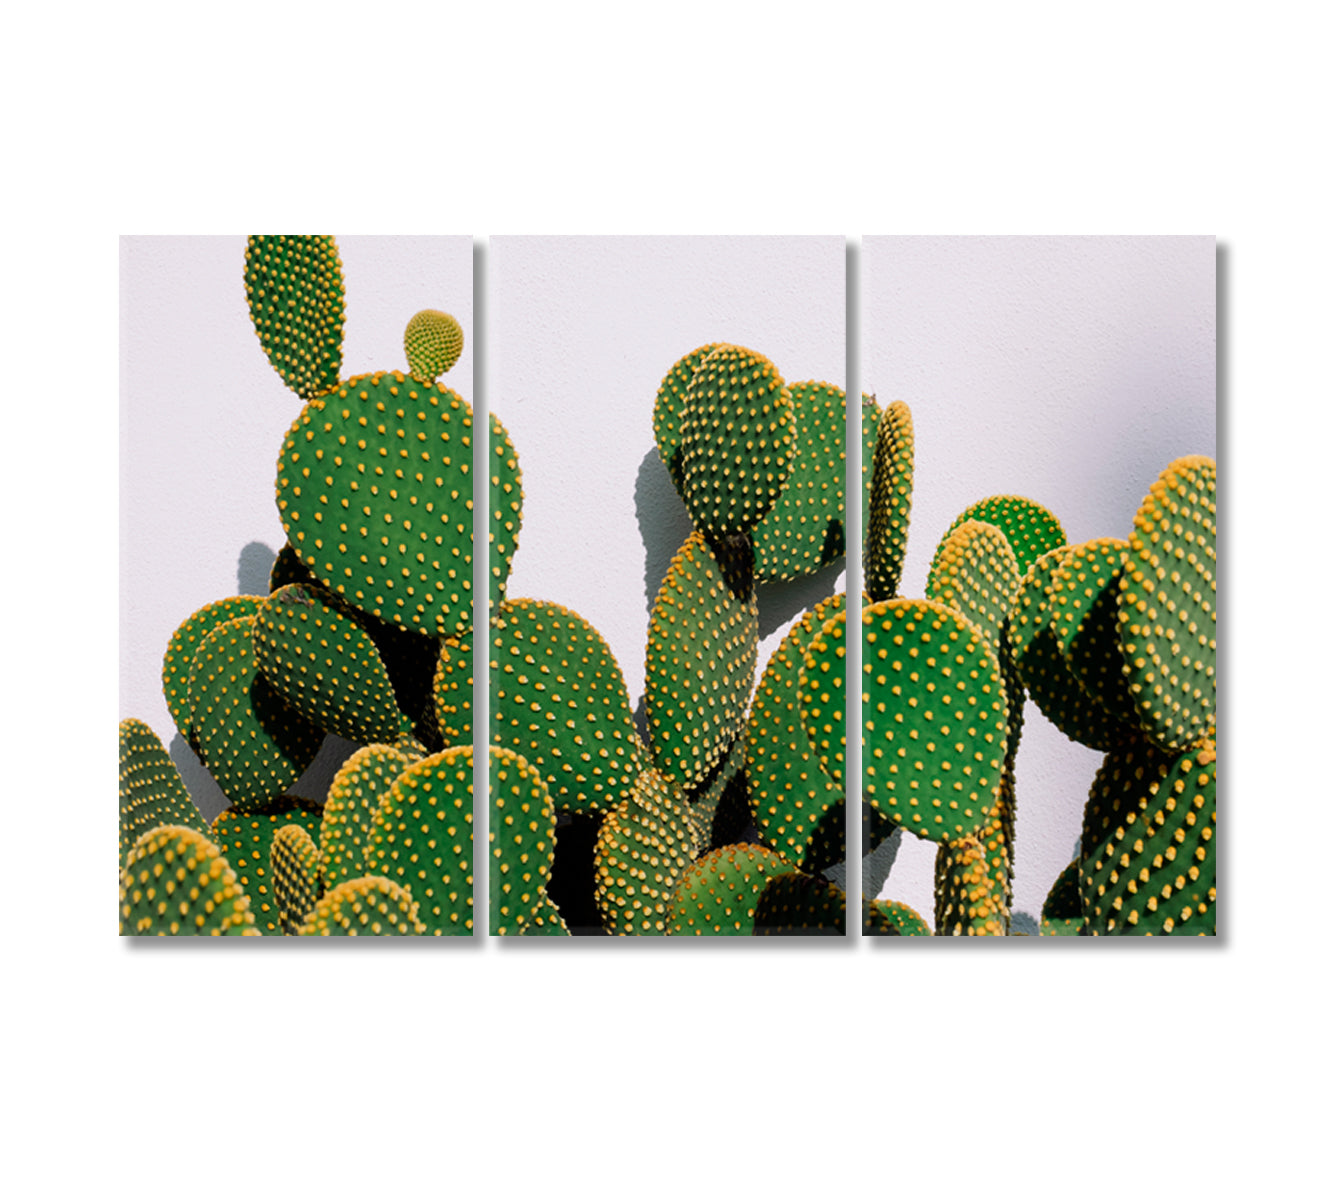 Bunny Ear Cactus Wall Decor Canvas-Canvas Print-CetArt-3 Panels-36x24 inches-CetArt